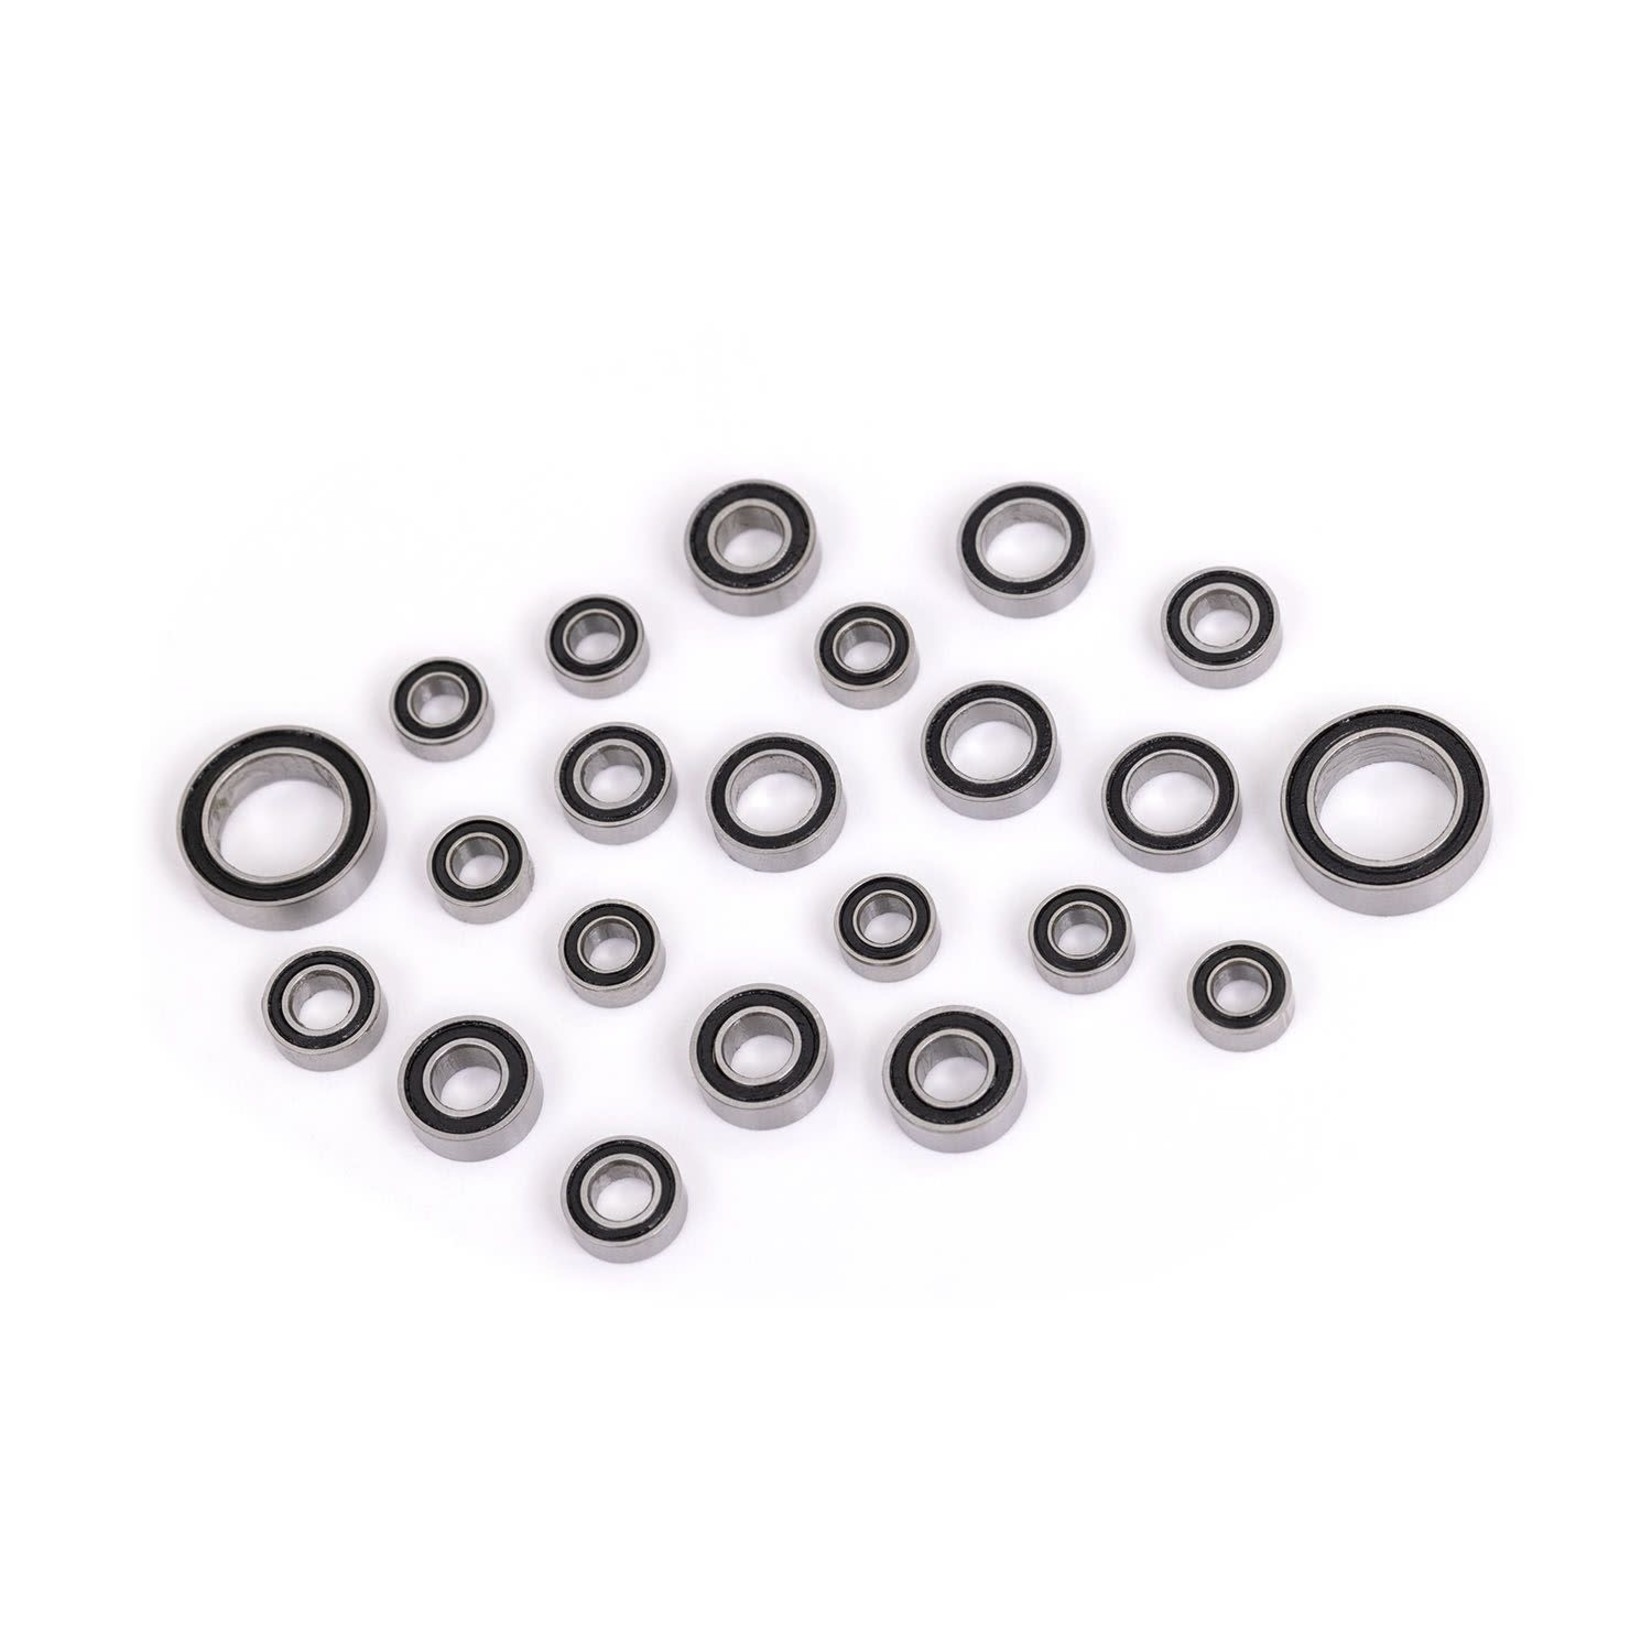 Traxxas 9745X   Ball bearing set, black rubber sealed, complete (3x6x2.5mm (8), 5x8x2.5mm (4), 4x8x3mm (4), 8x12x3.5mm (2), 3.5x7x2.5mm (4))